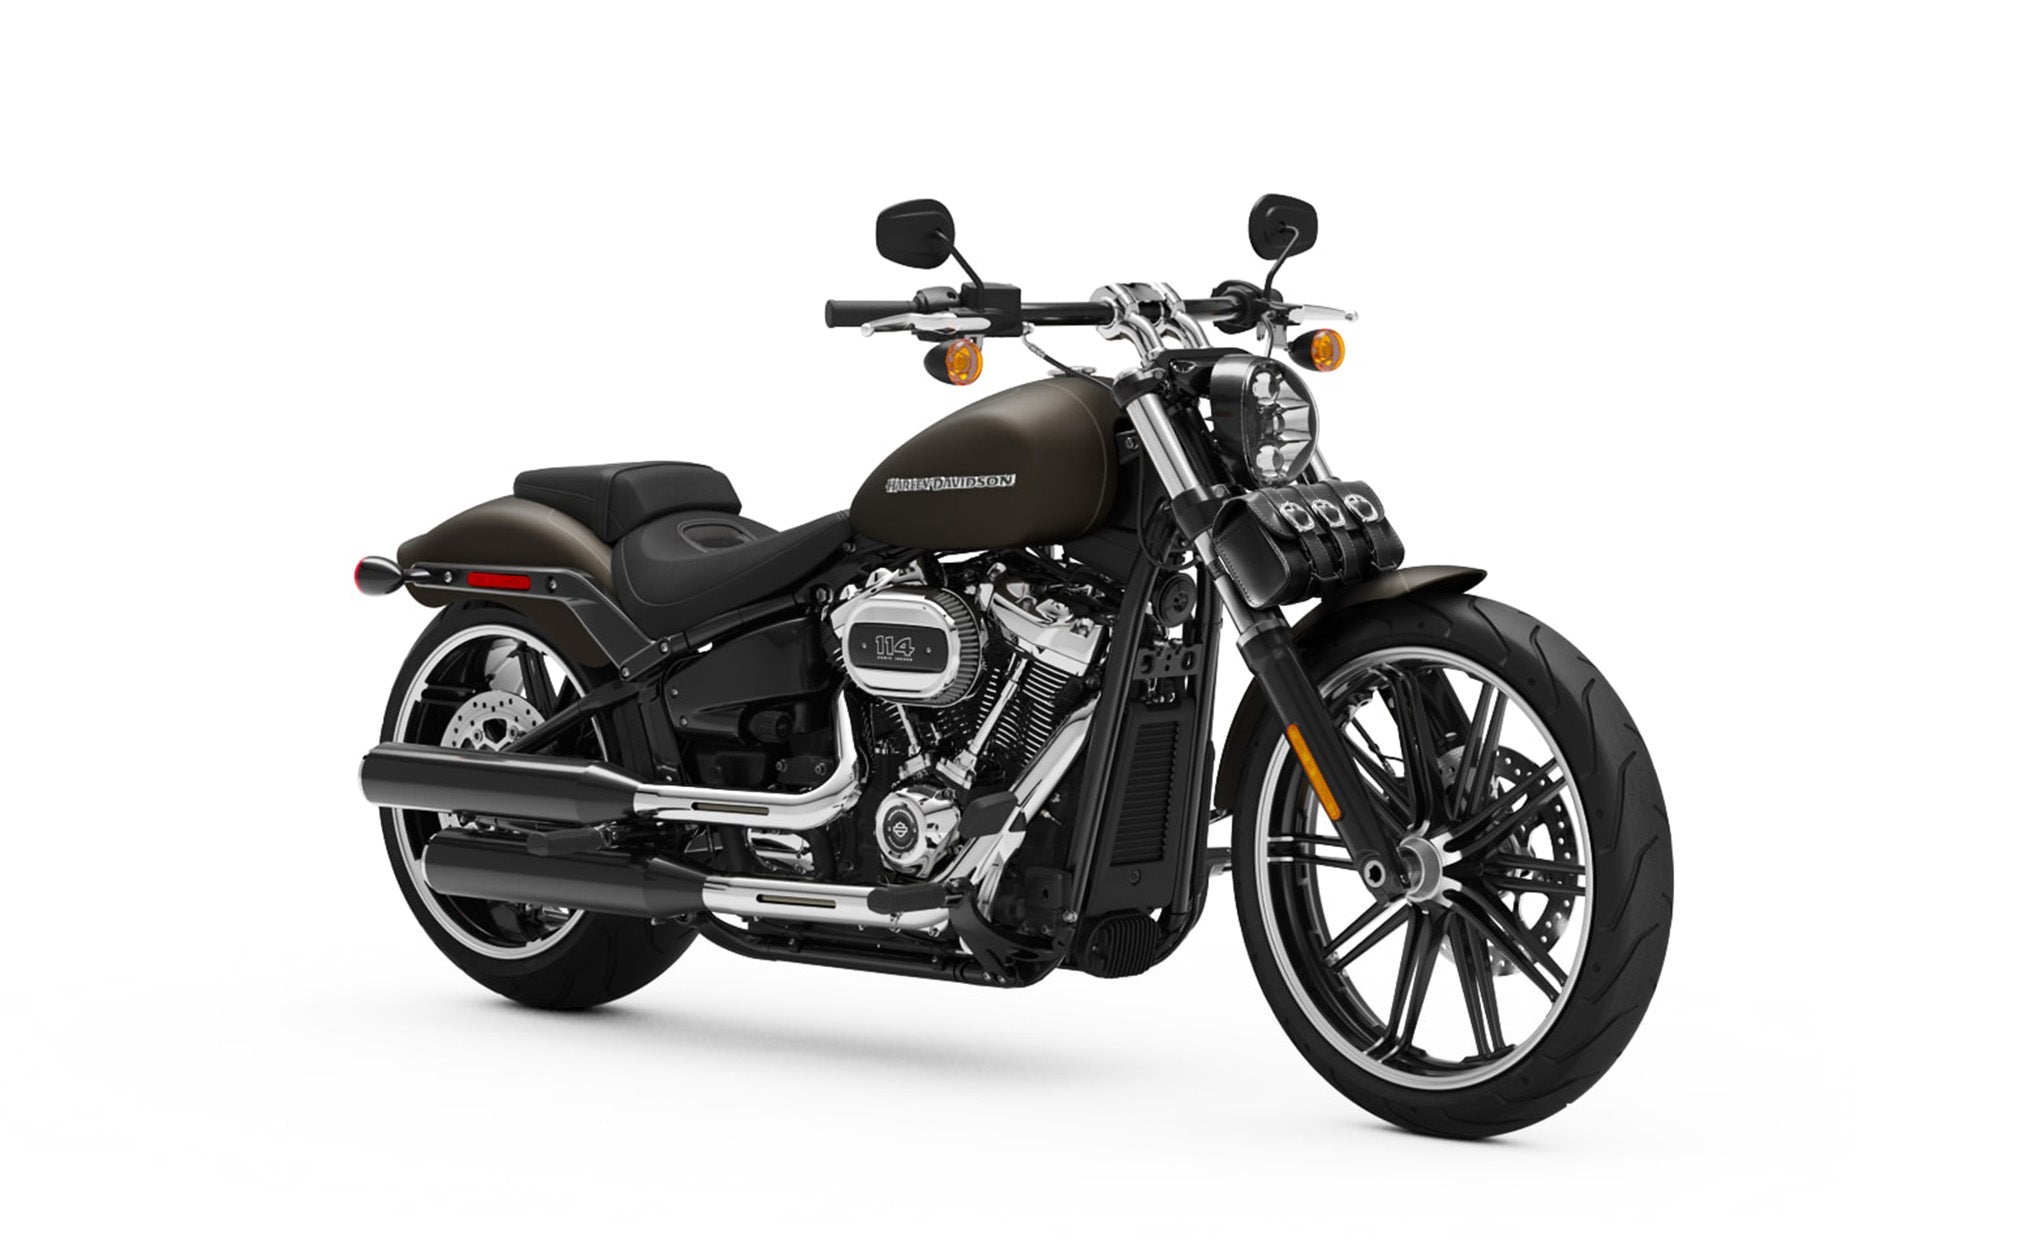 Viking Trianon Plain Leather Handlebar Bag For Harley Davidson Bag on Bike View @expand